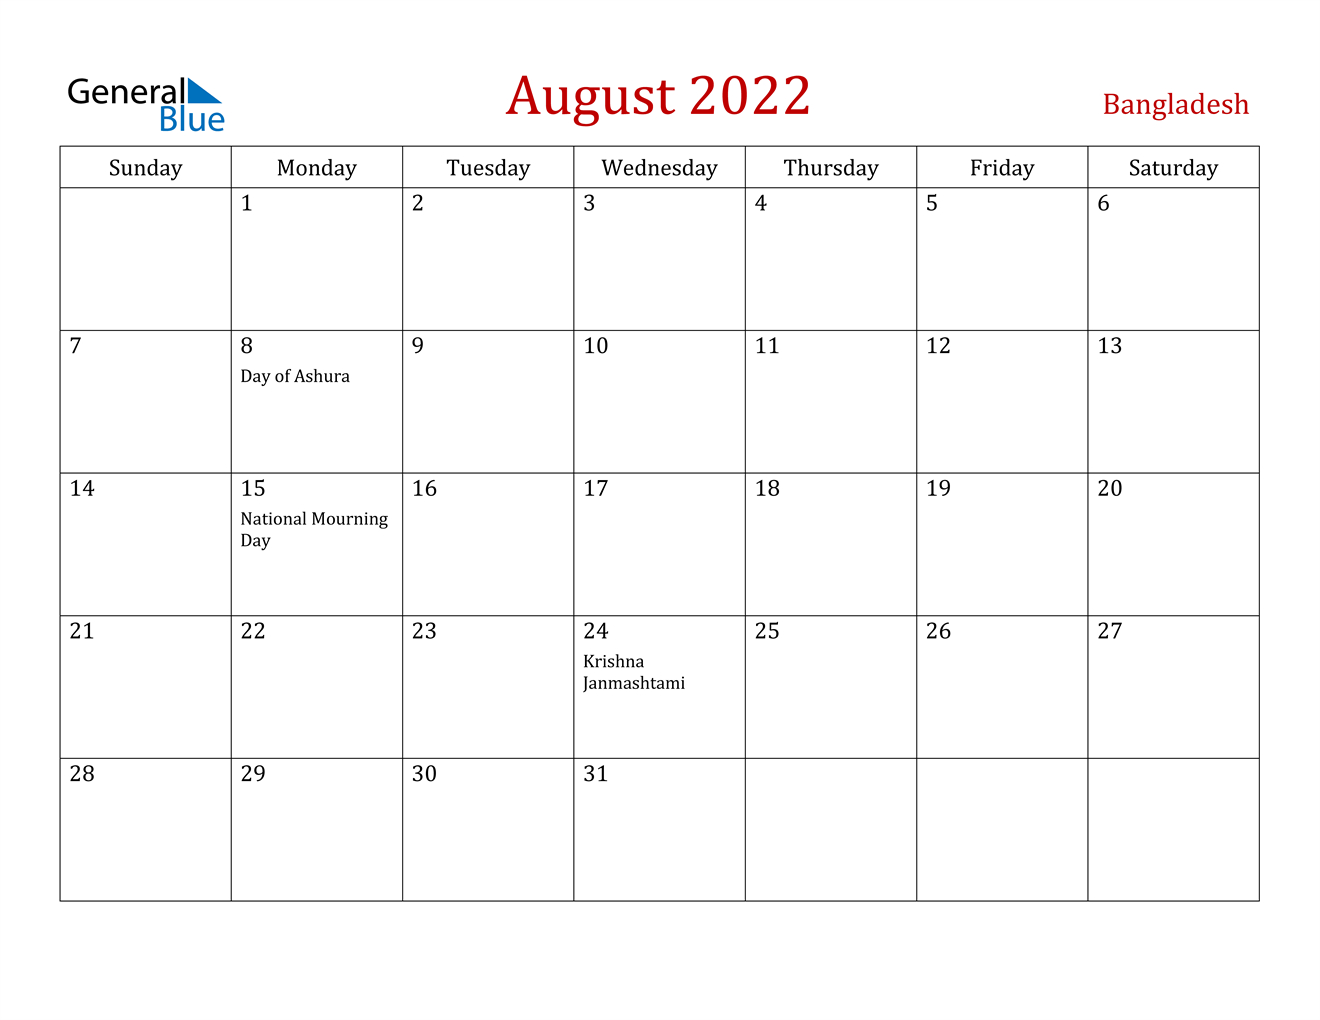 Take August 2022 Calendar Image